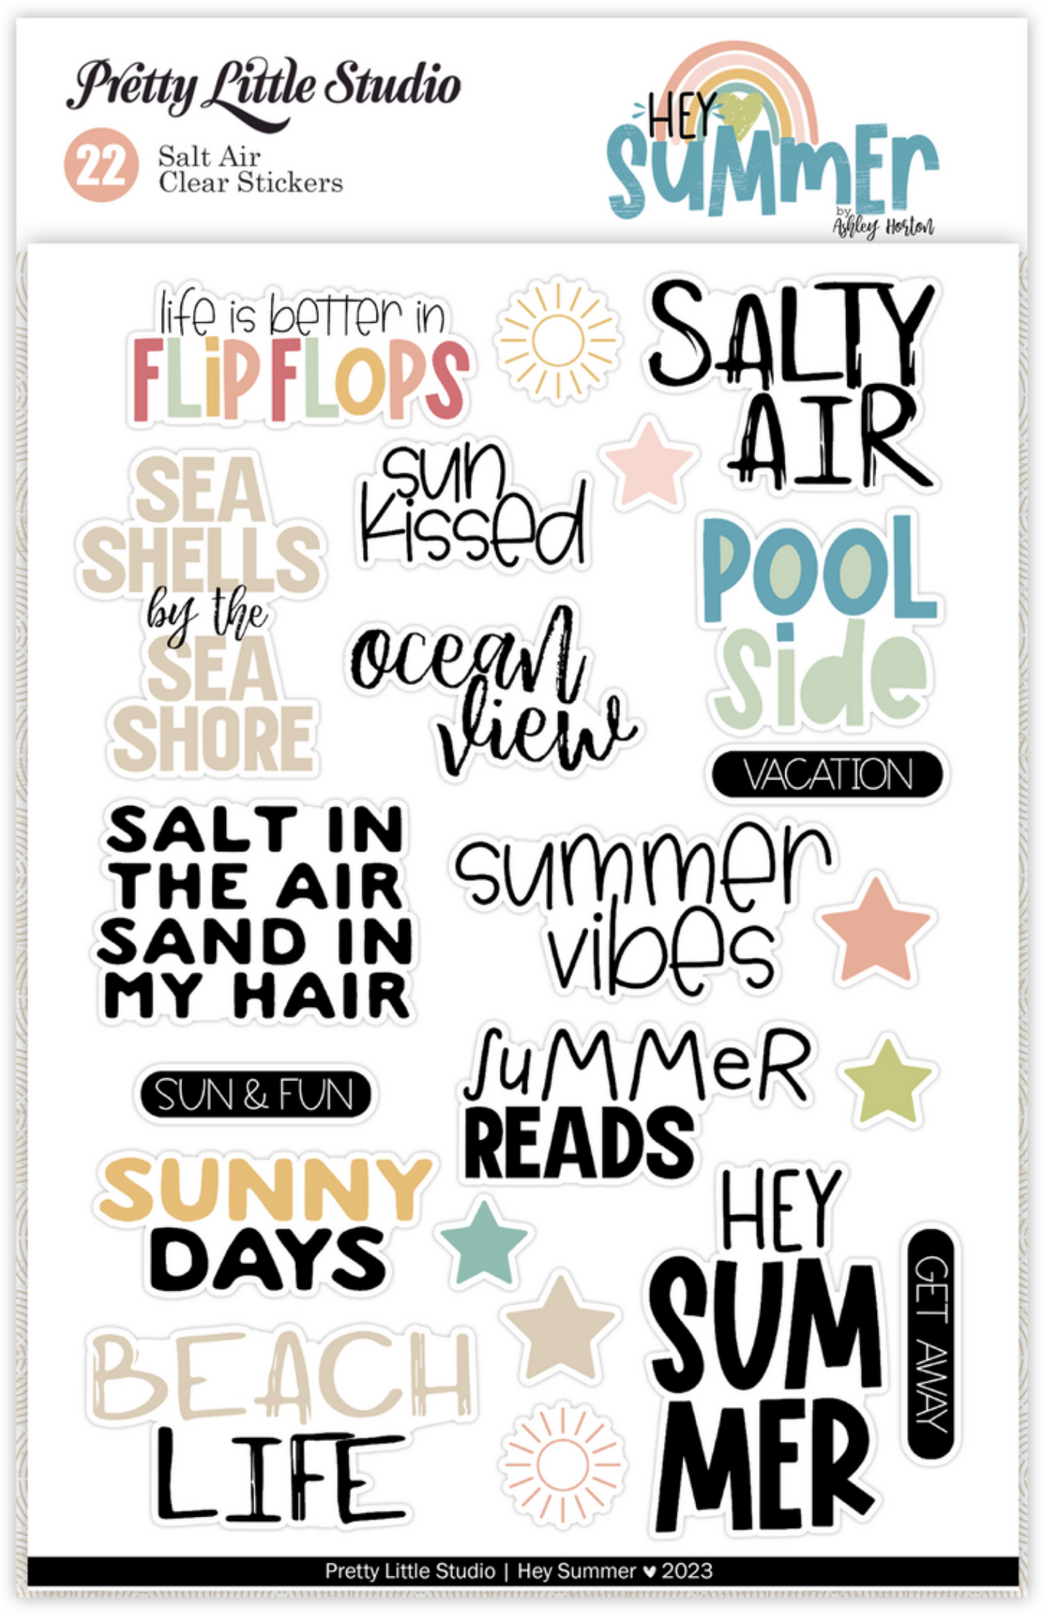 Hey Summer - Salt Air Clear Stickers